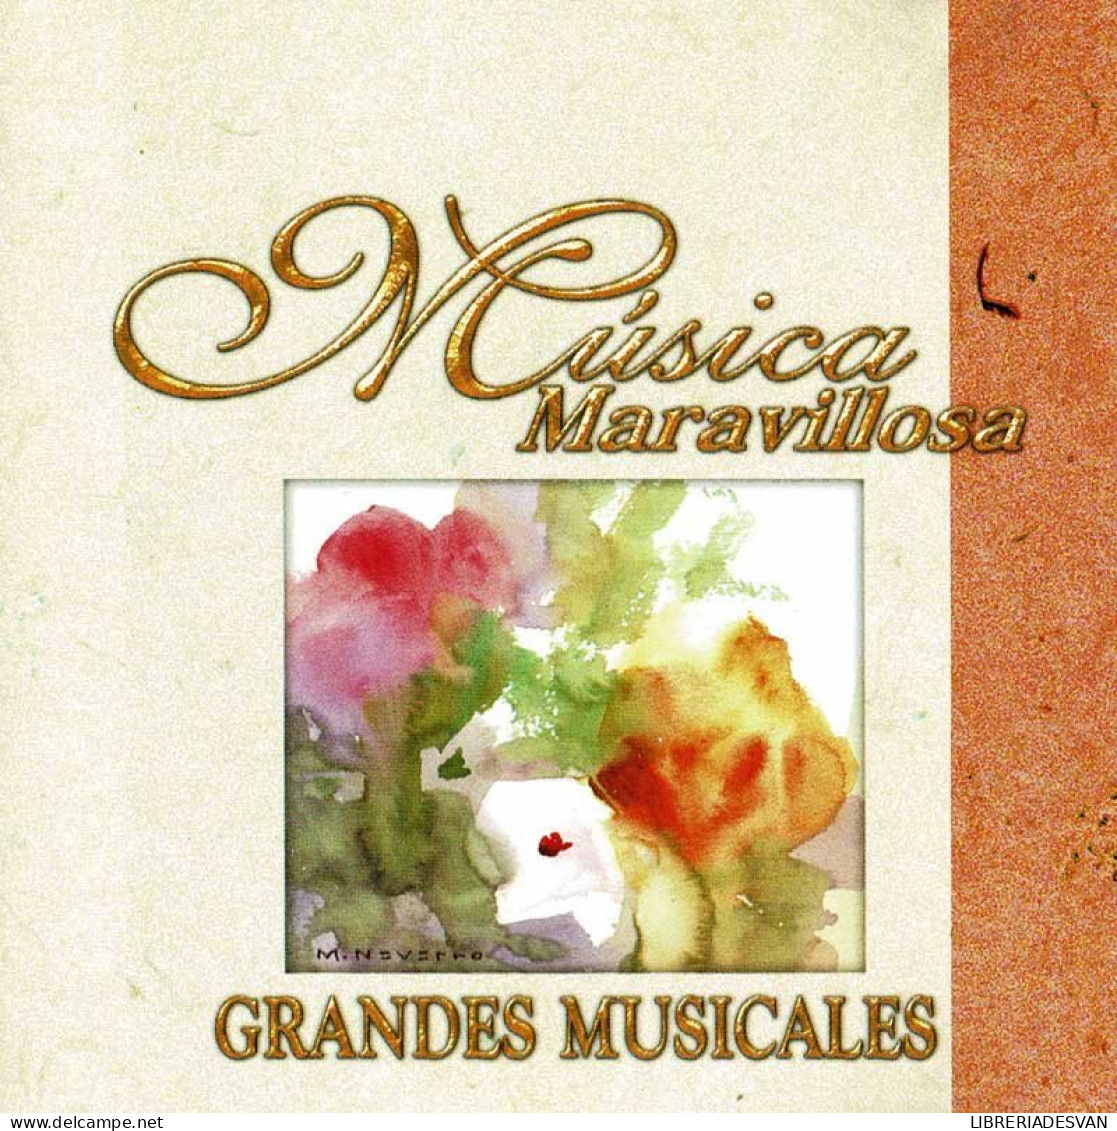 Música Maravillosa. Grandes Musicales Vol. 2. CD - Soundtracks, Film Music